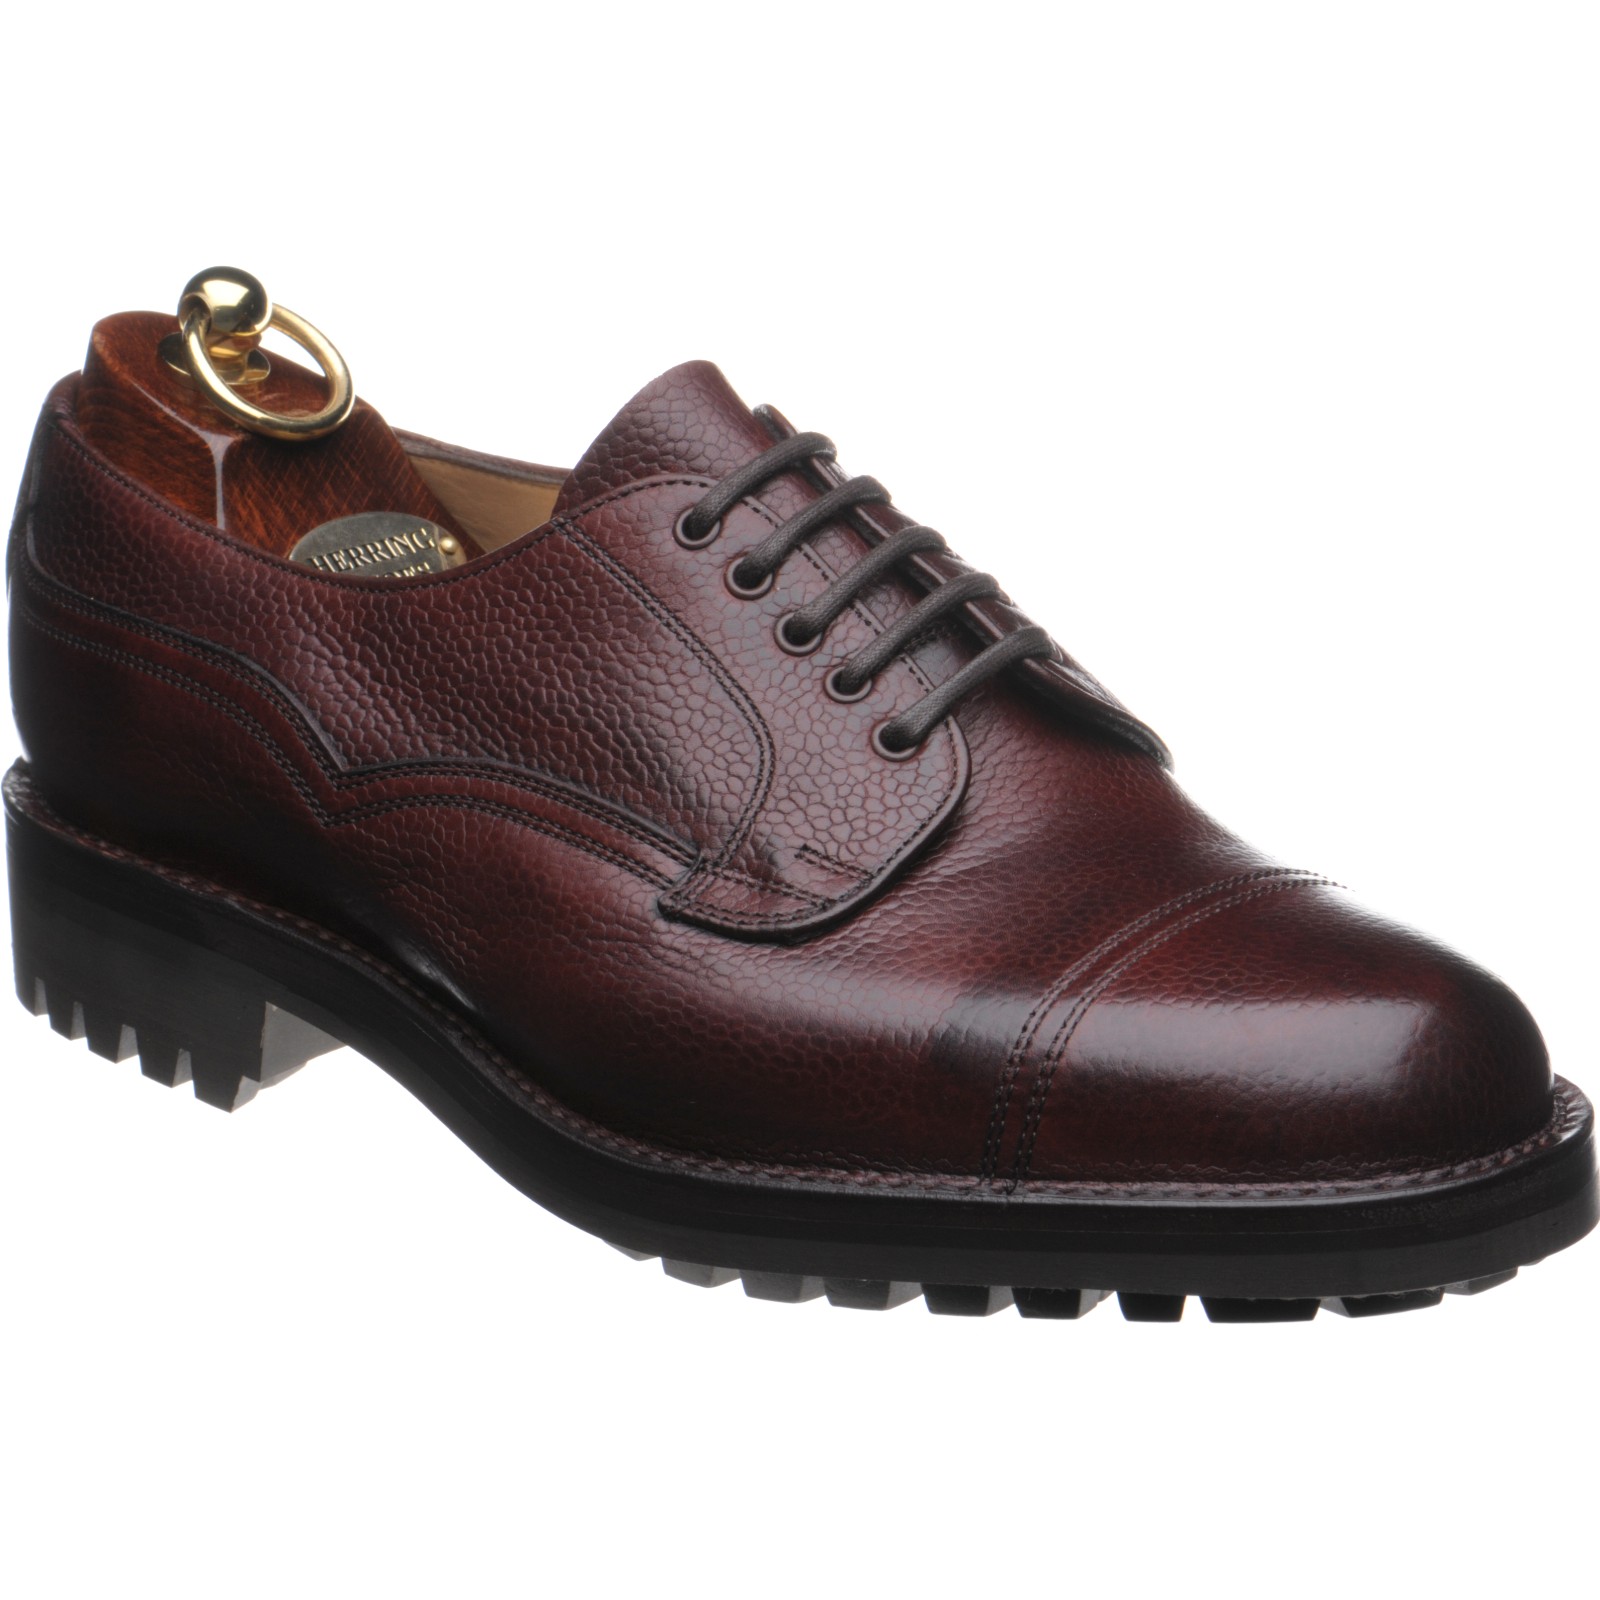 Herring shoes | Herring Premier | Wasdale rubber-soled Derby shoes in ...